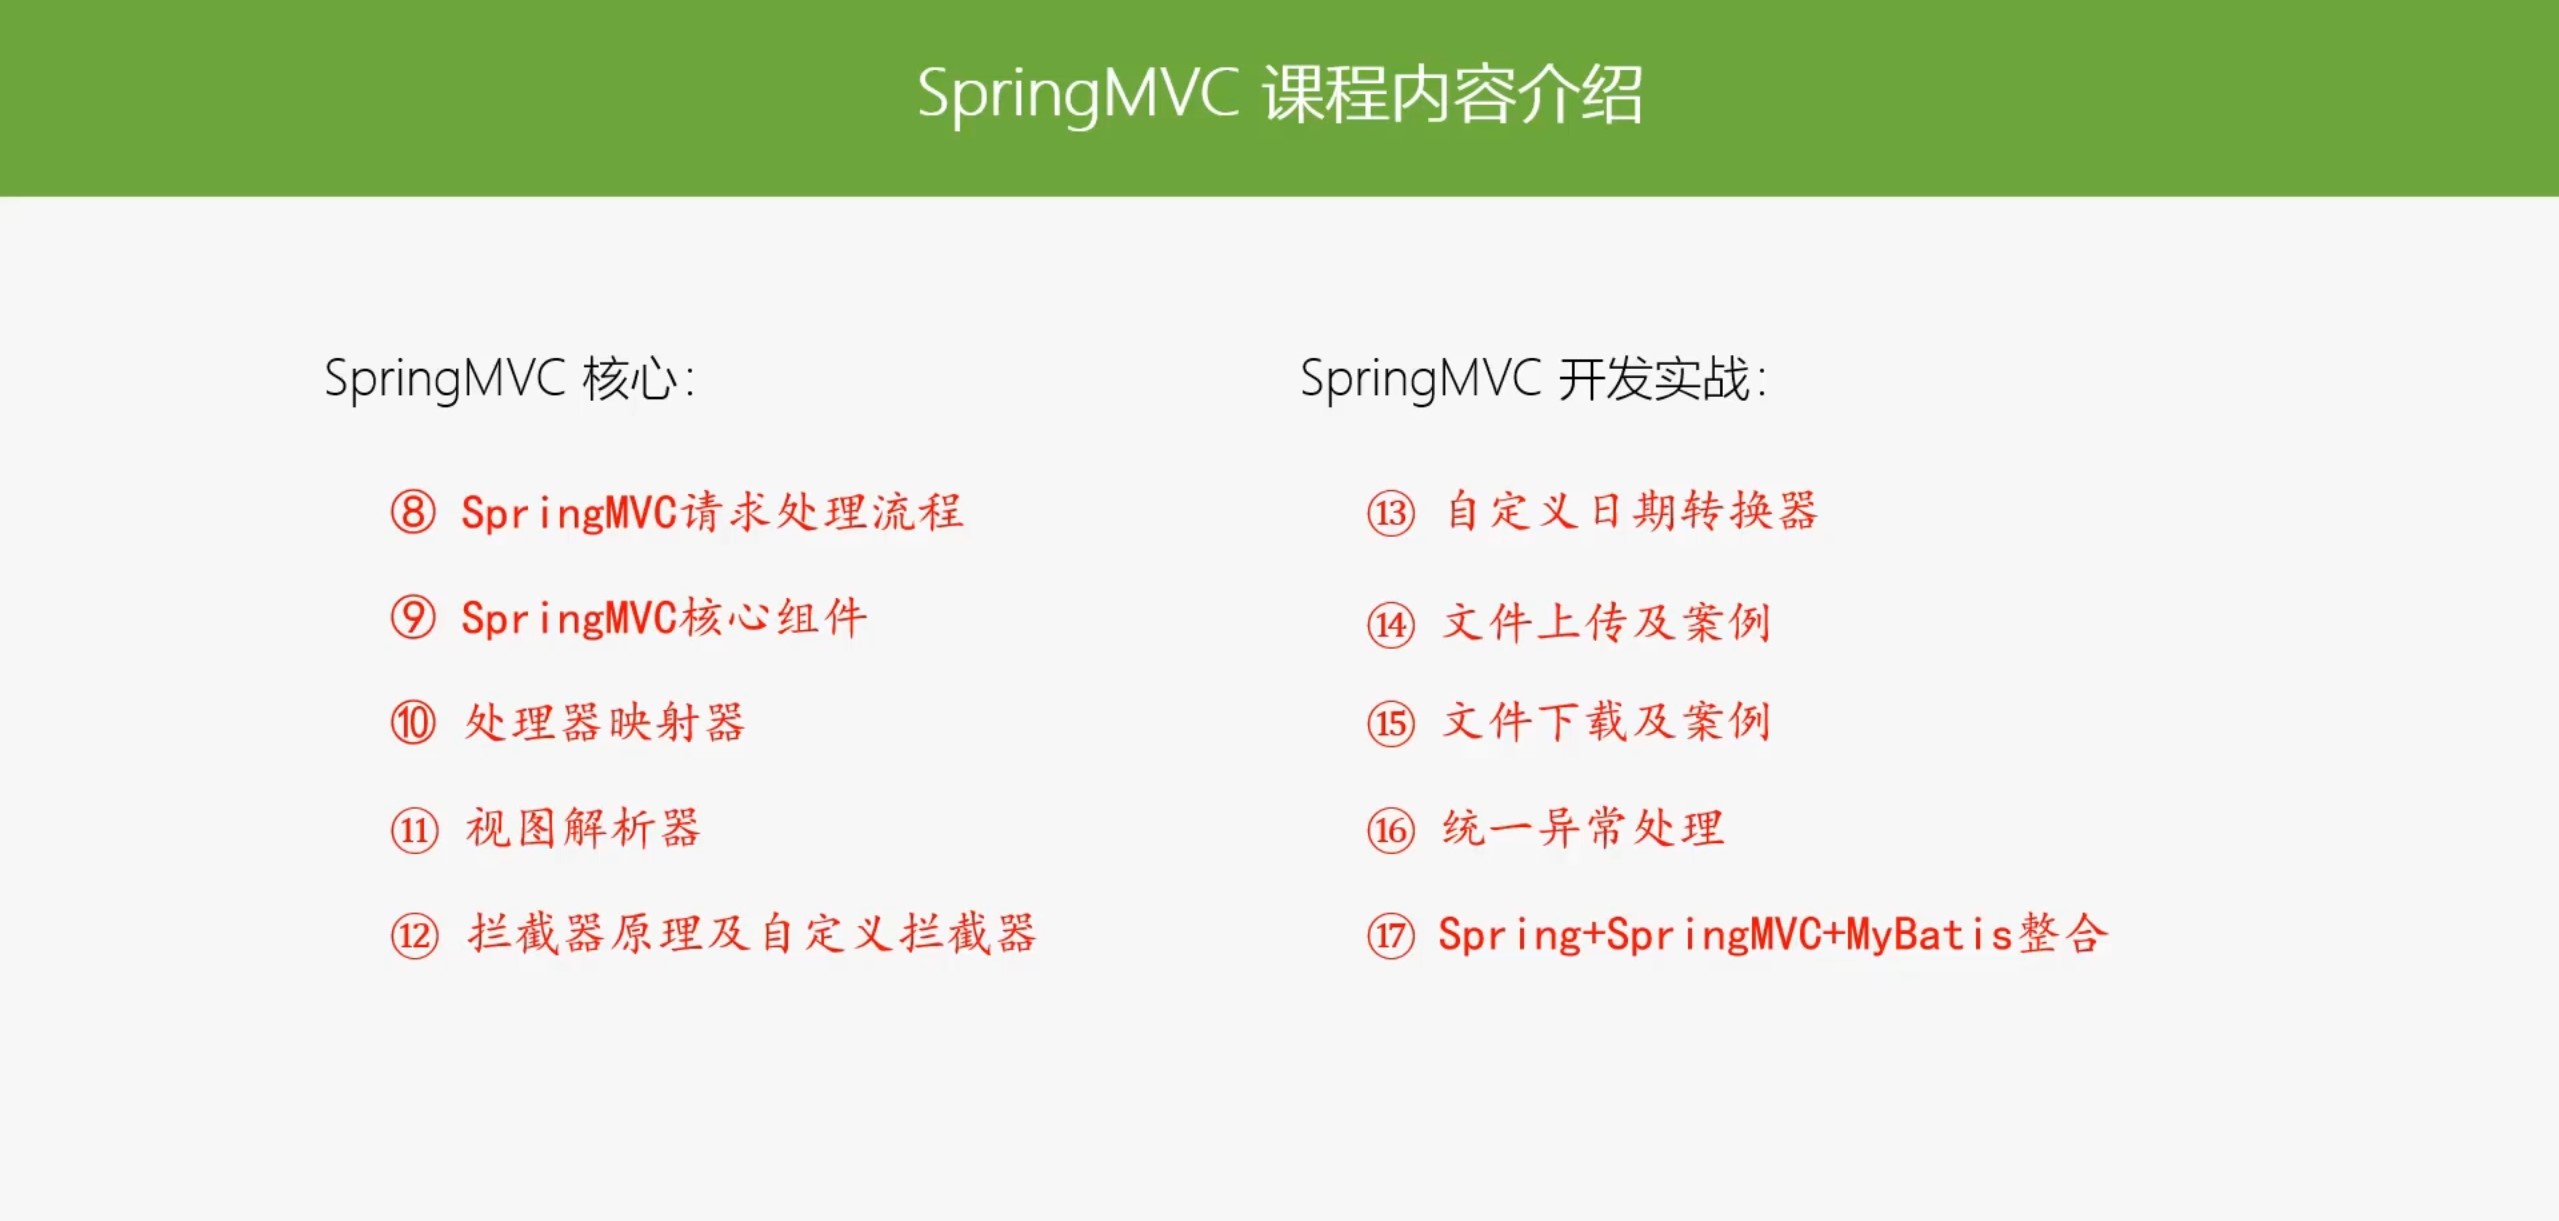 6、SpringMVC - 图2